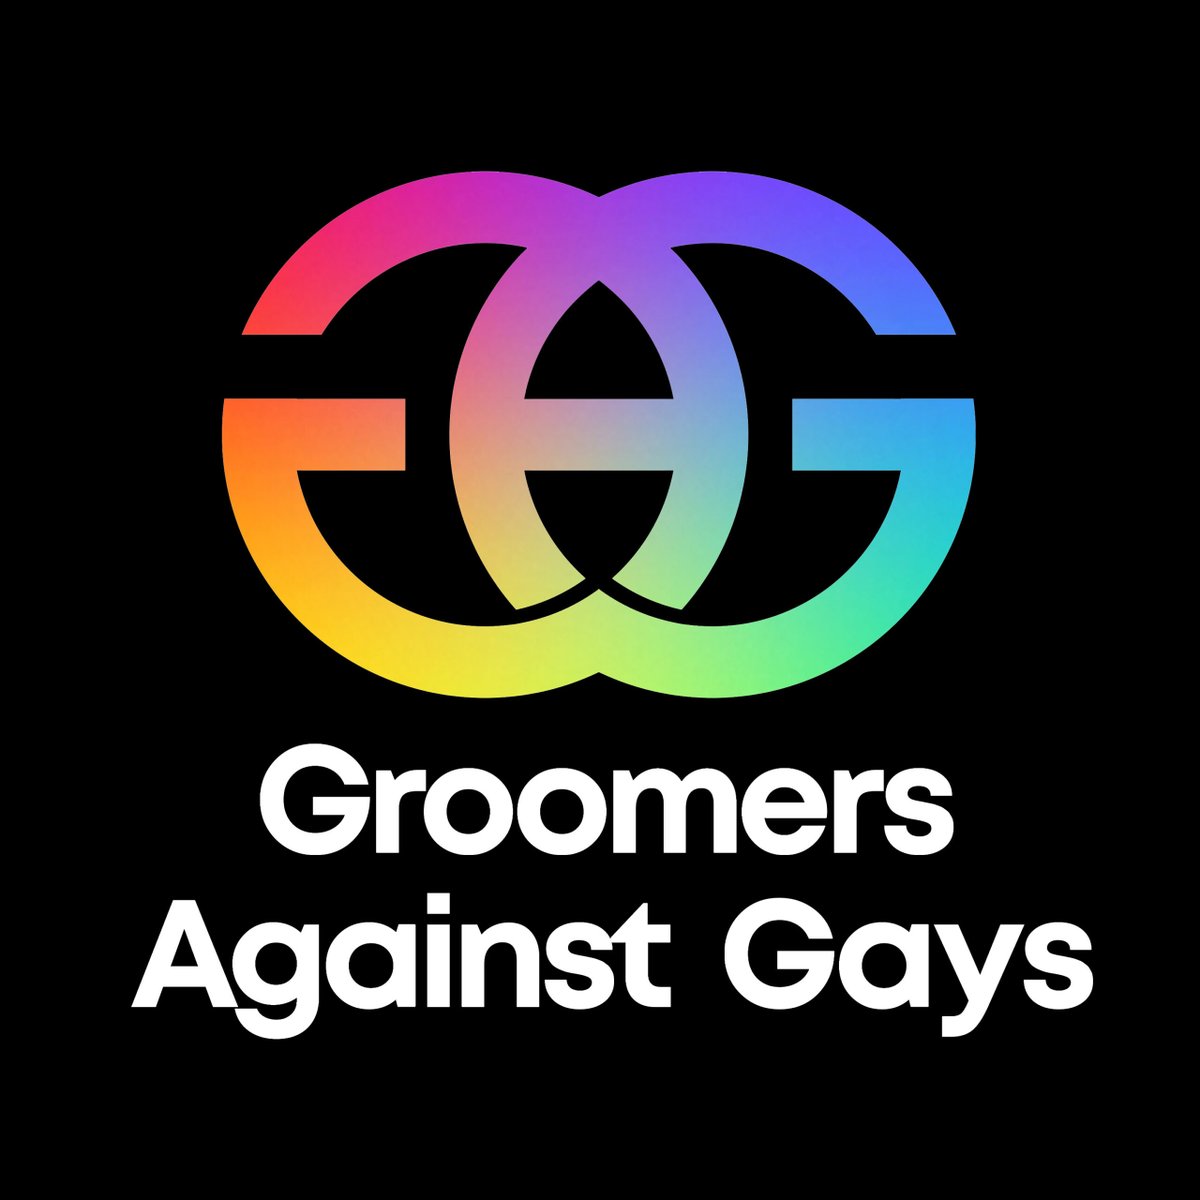 @LoveStopsHatred @theserfstv #Rebranding
#GroomersAgainstGays
#GaysAgainstGroomers